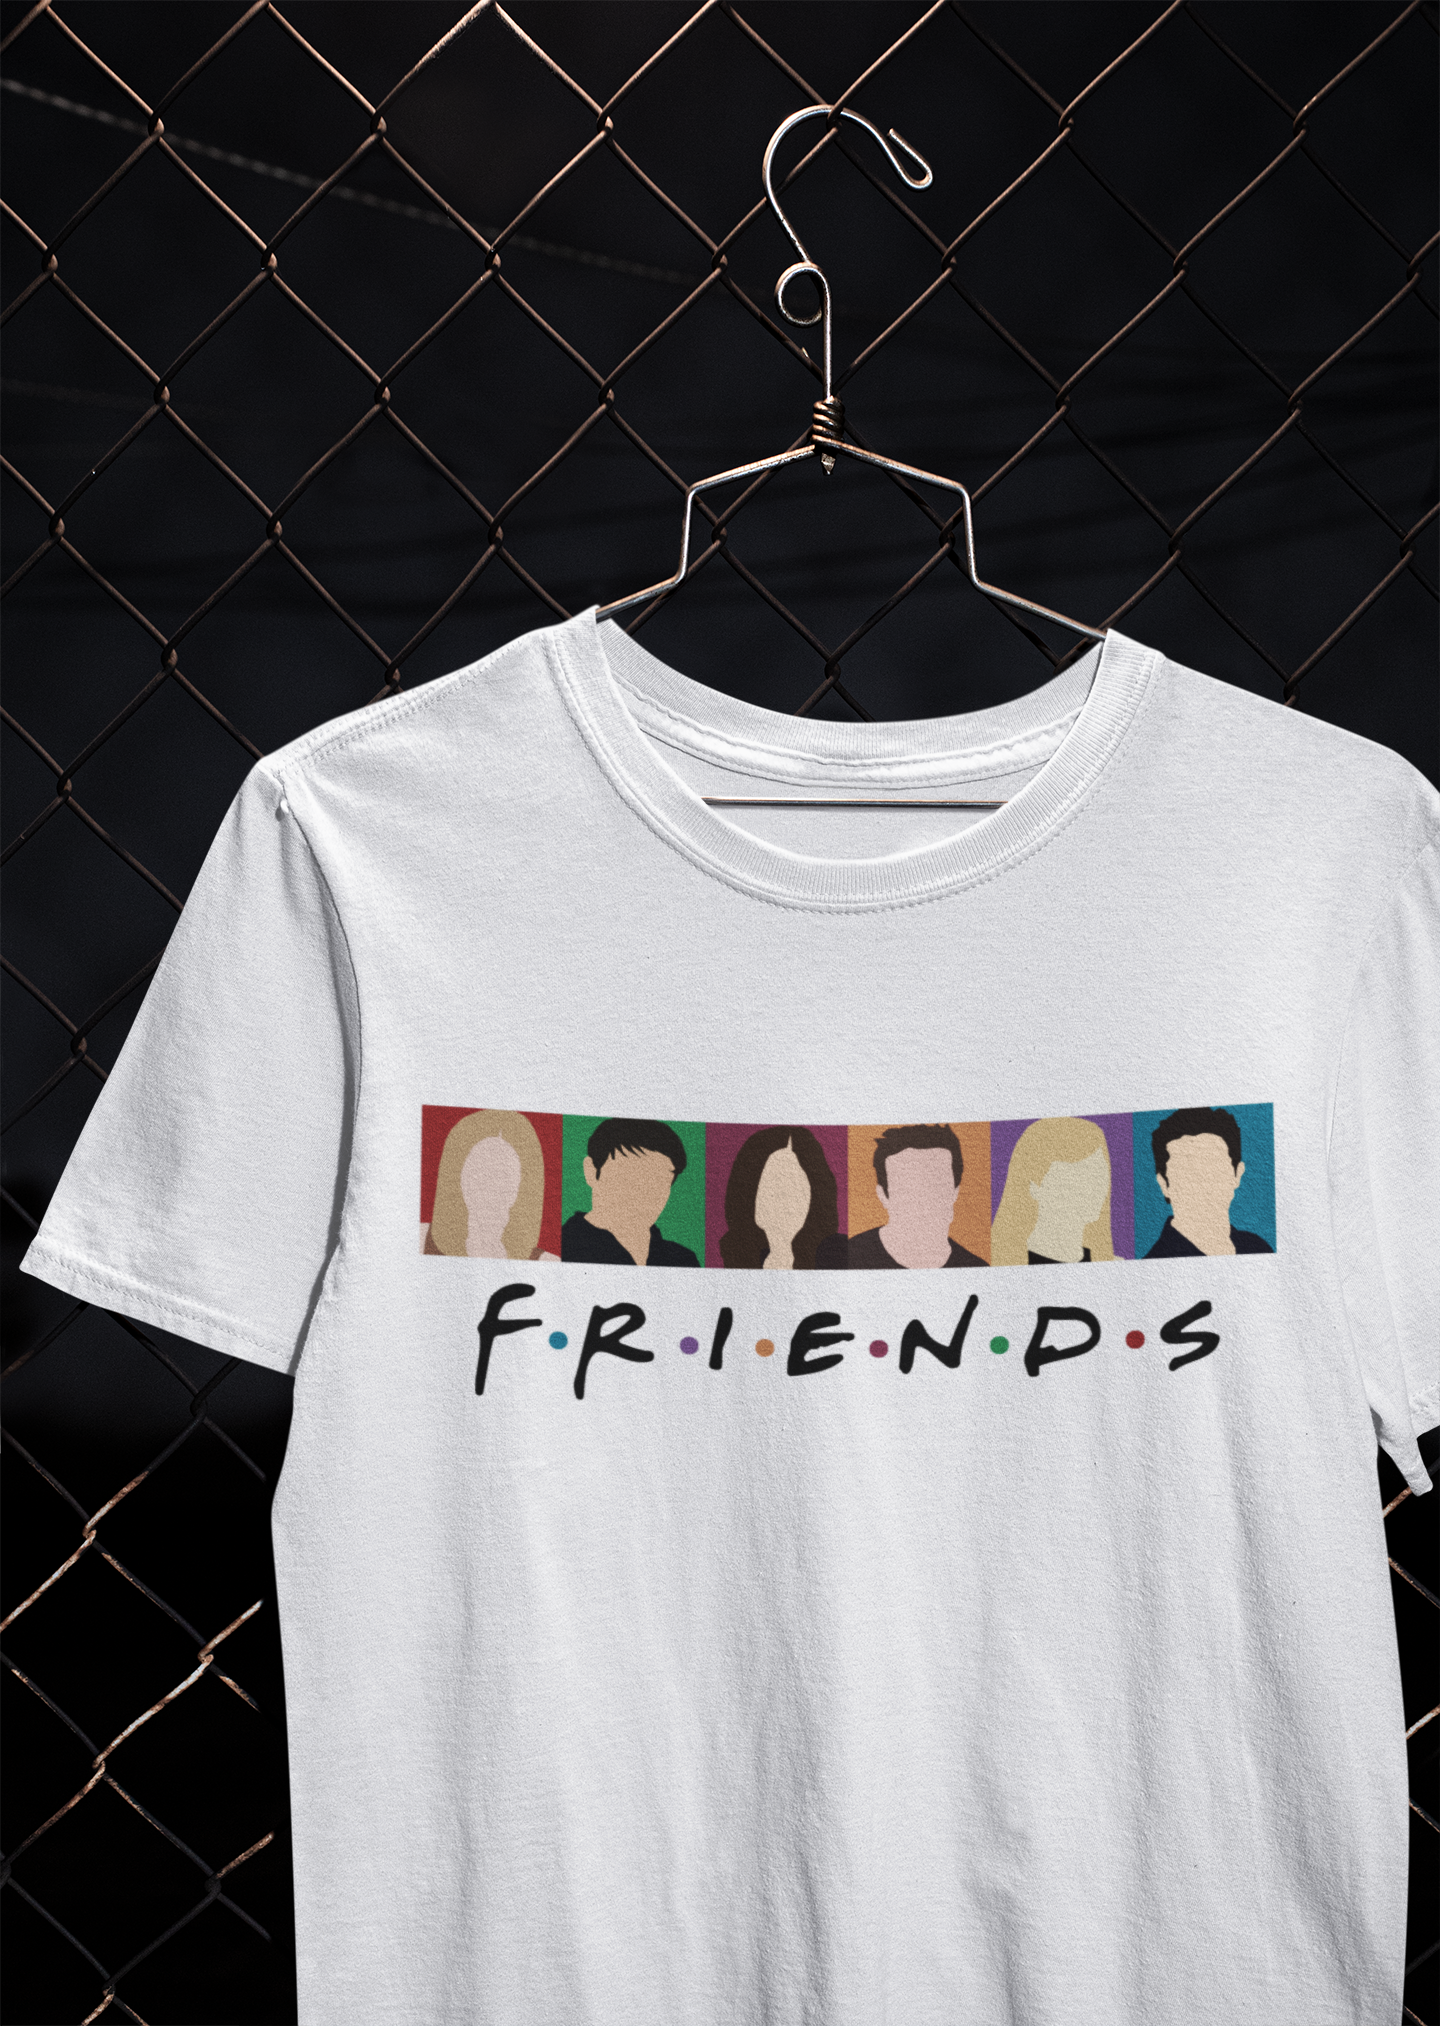 F.R.I.E.N.D.S. Friends Web Series Mens Half Sleeves T-shirt- FunkyTeesClub